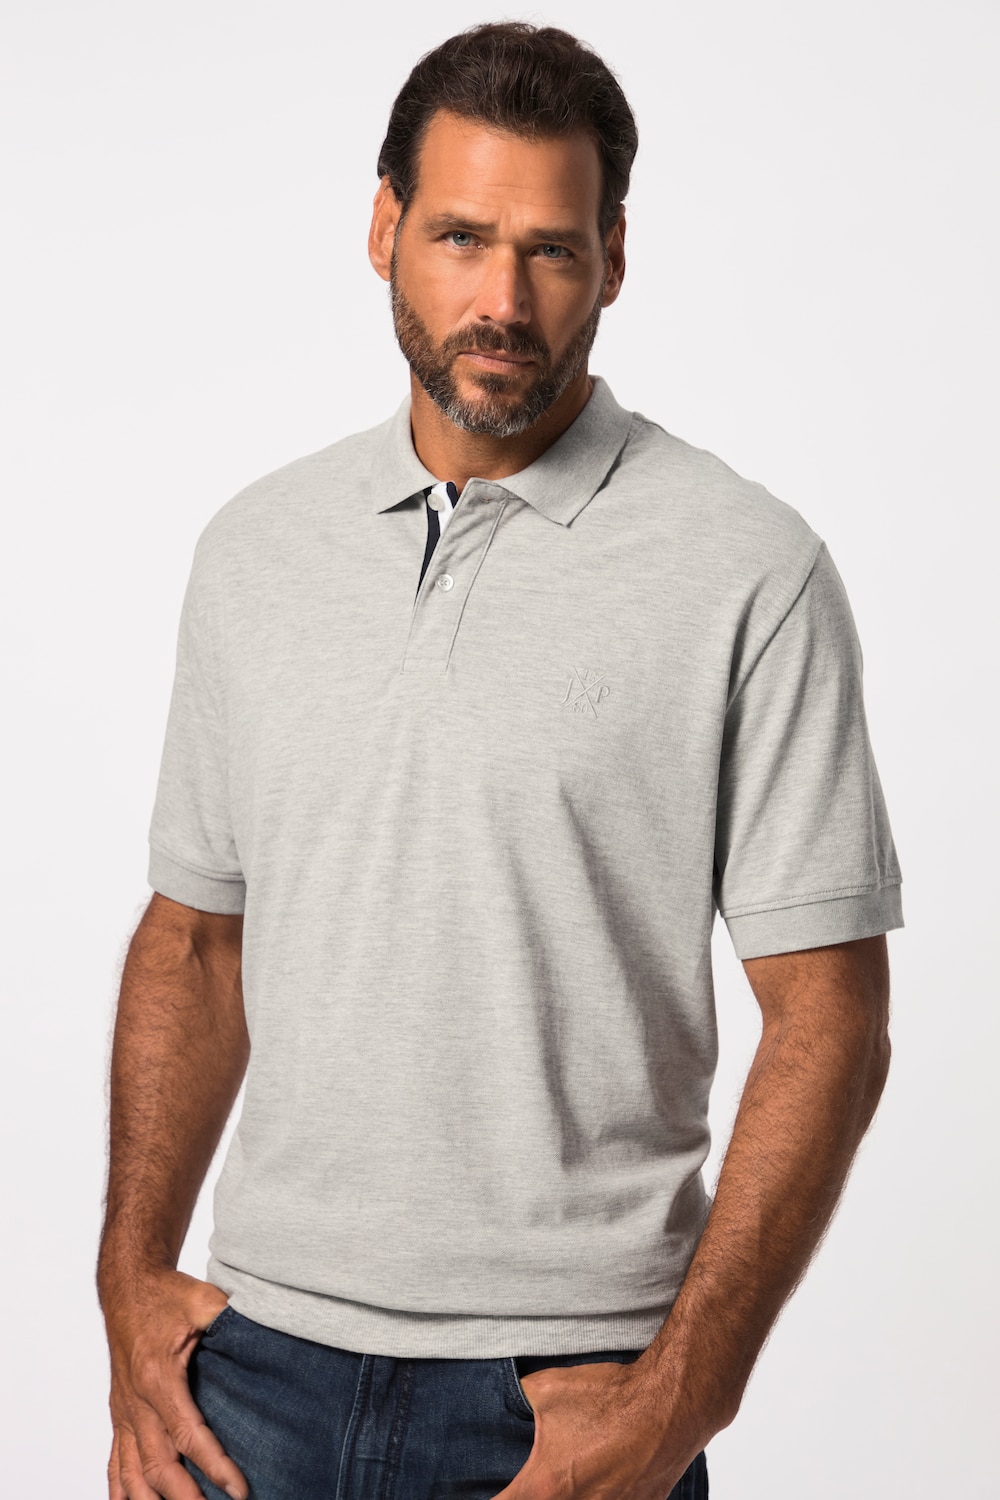 Große Größen Polo-Shirt, Herren, grau, Größe: 5XL, Baumwolle, JP1880